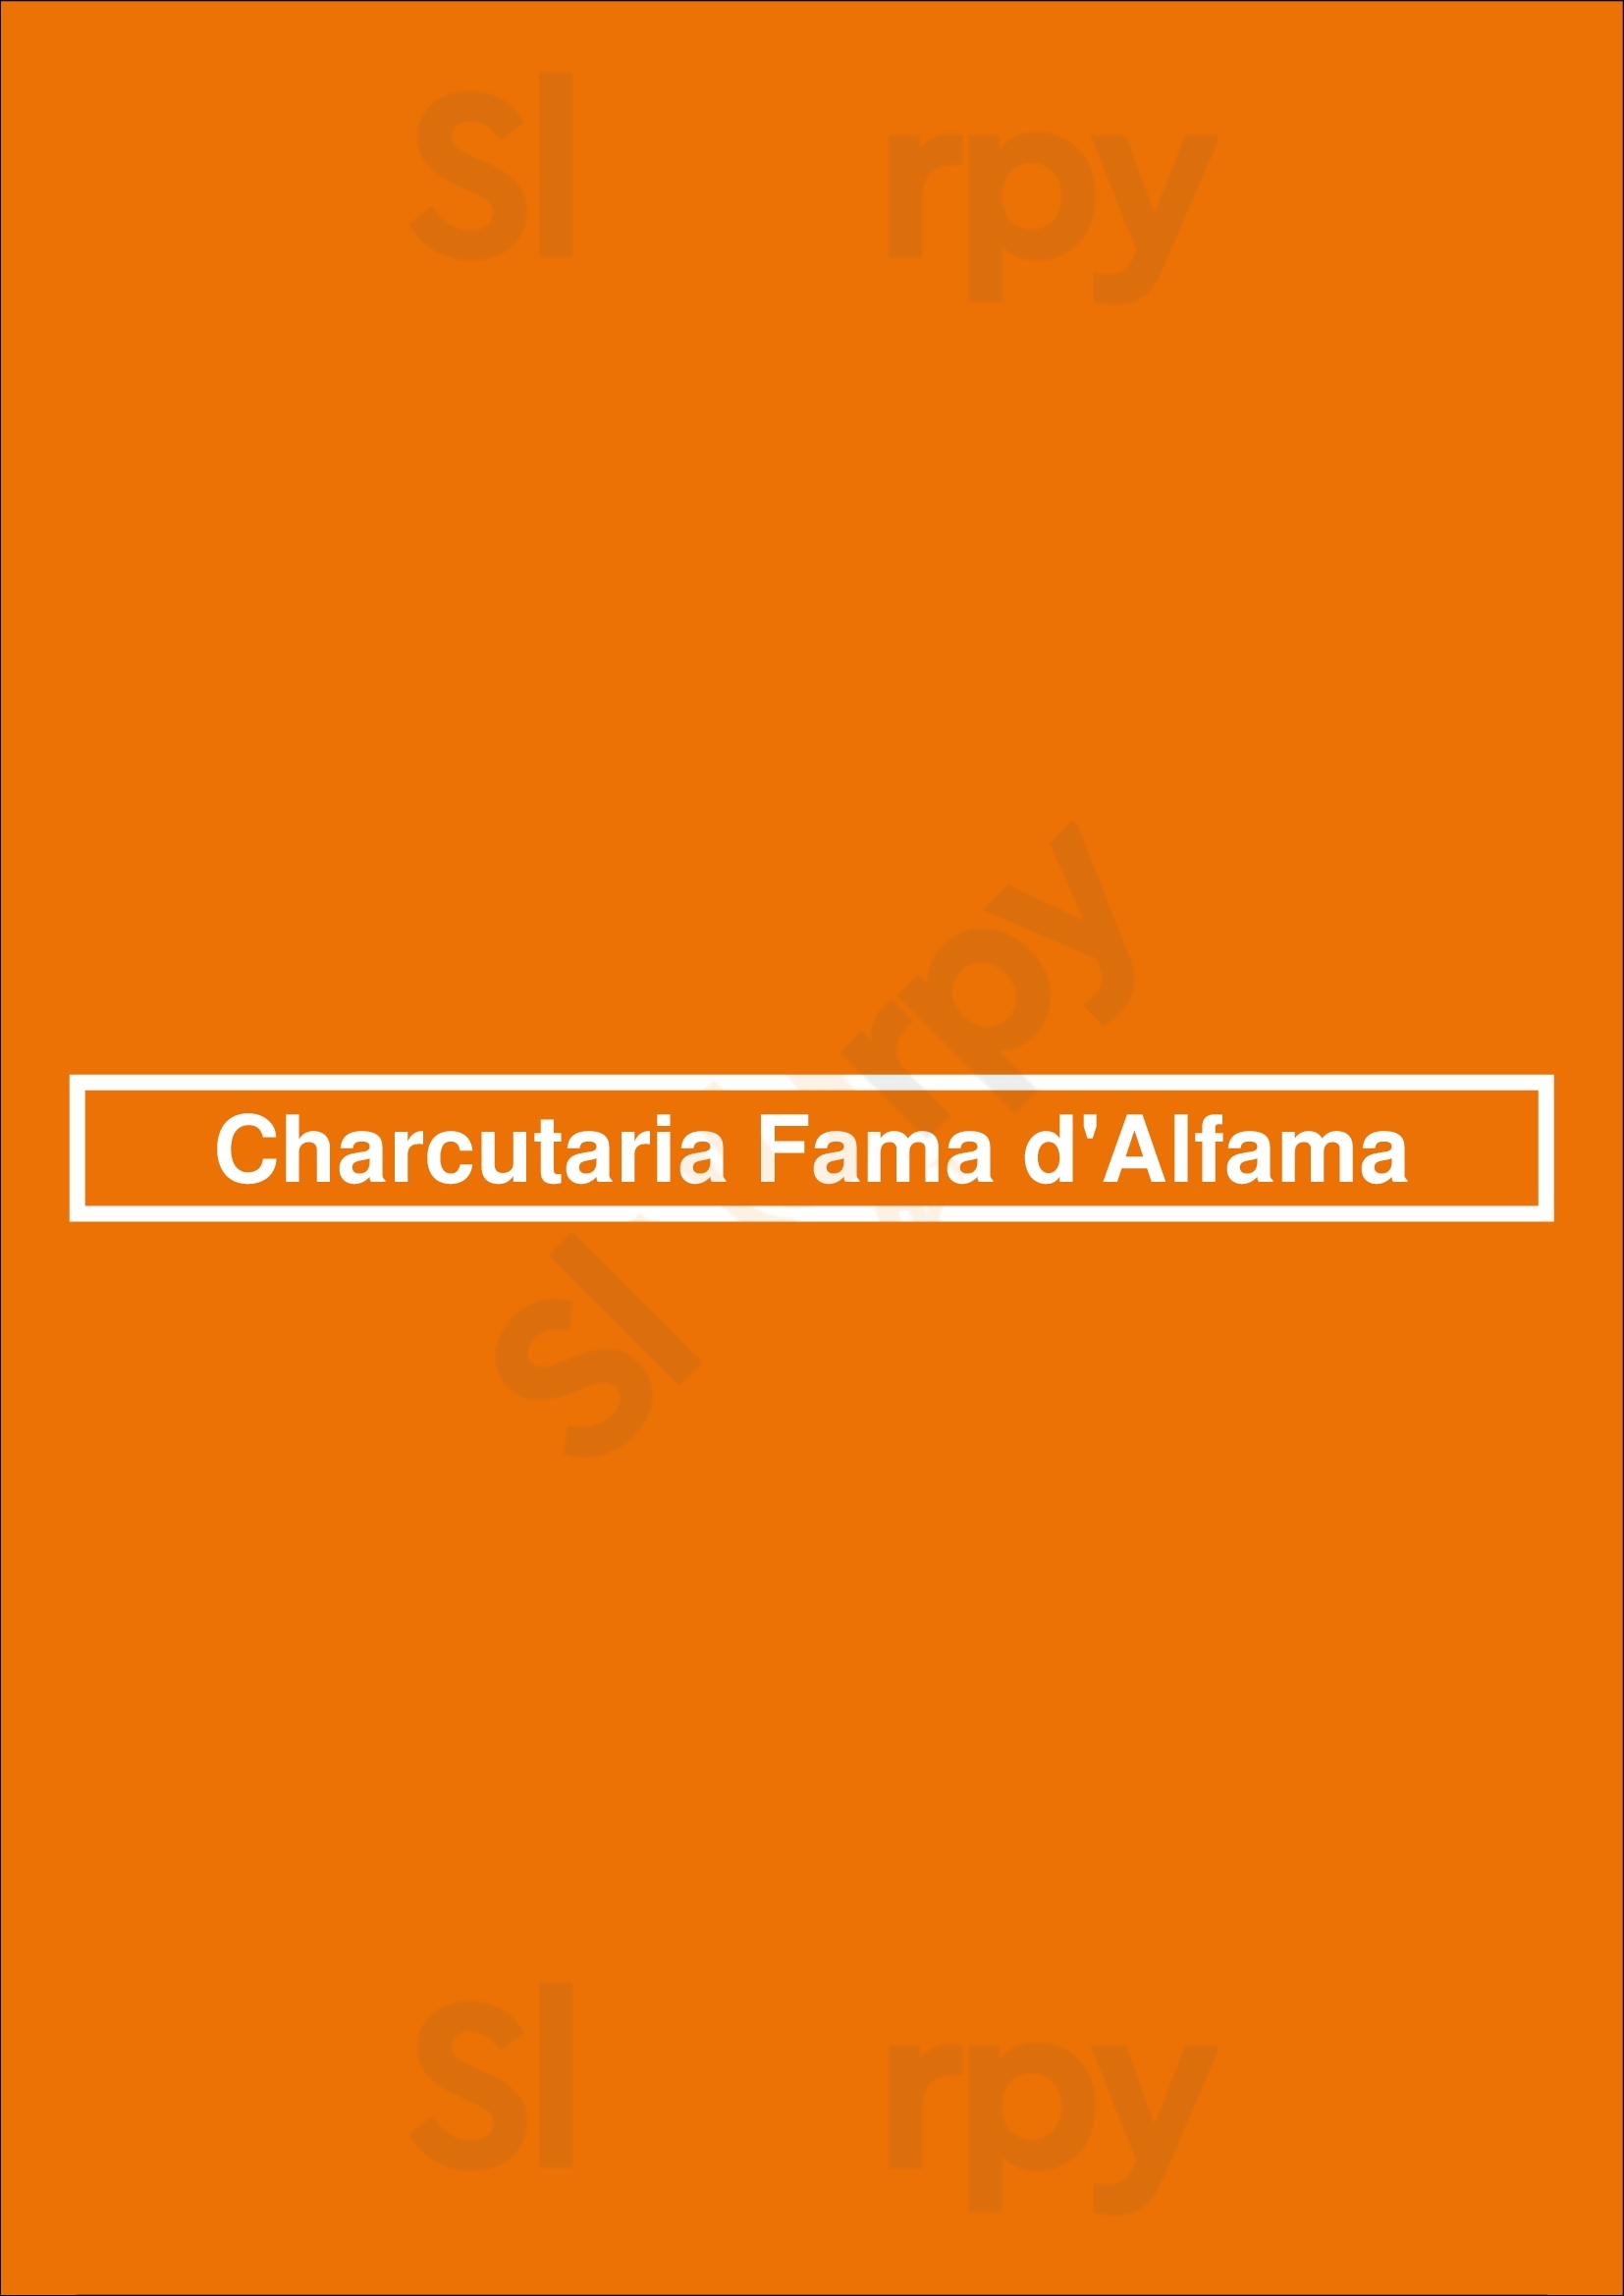 Charcutaria Fama D'alfama Lisboa Menu - 1